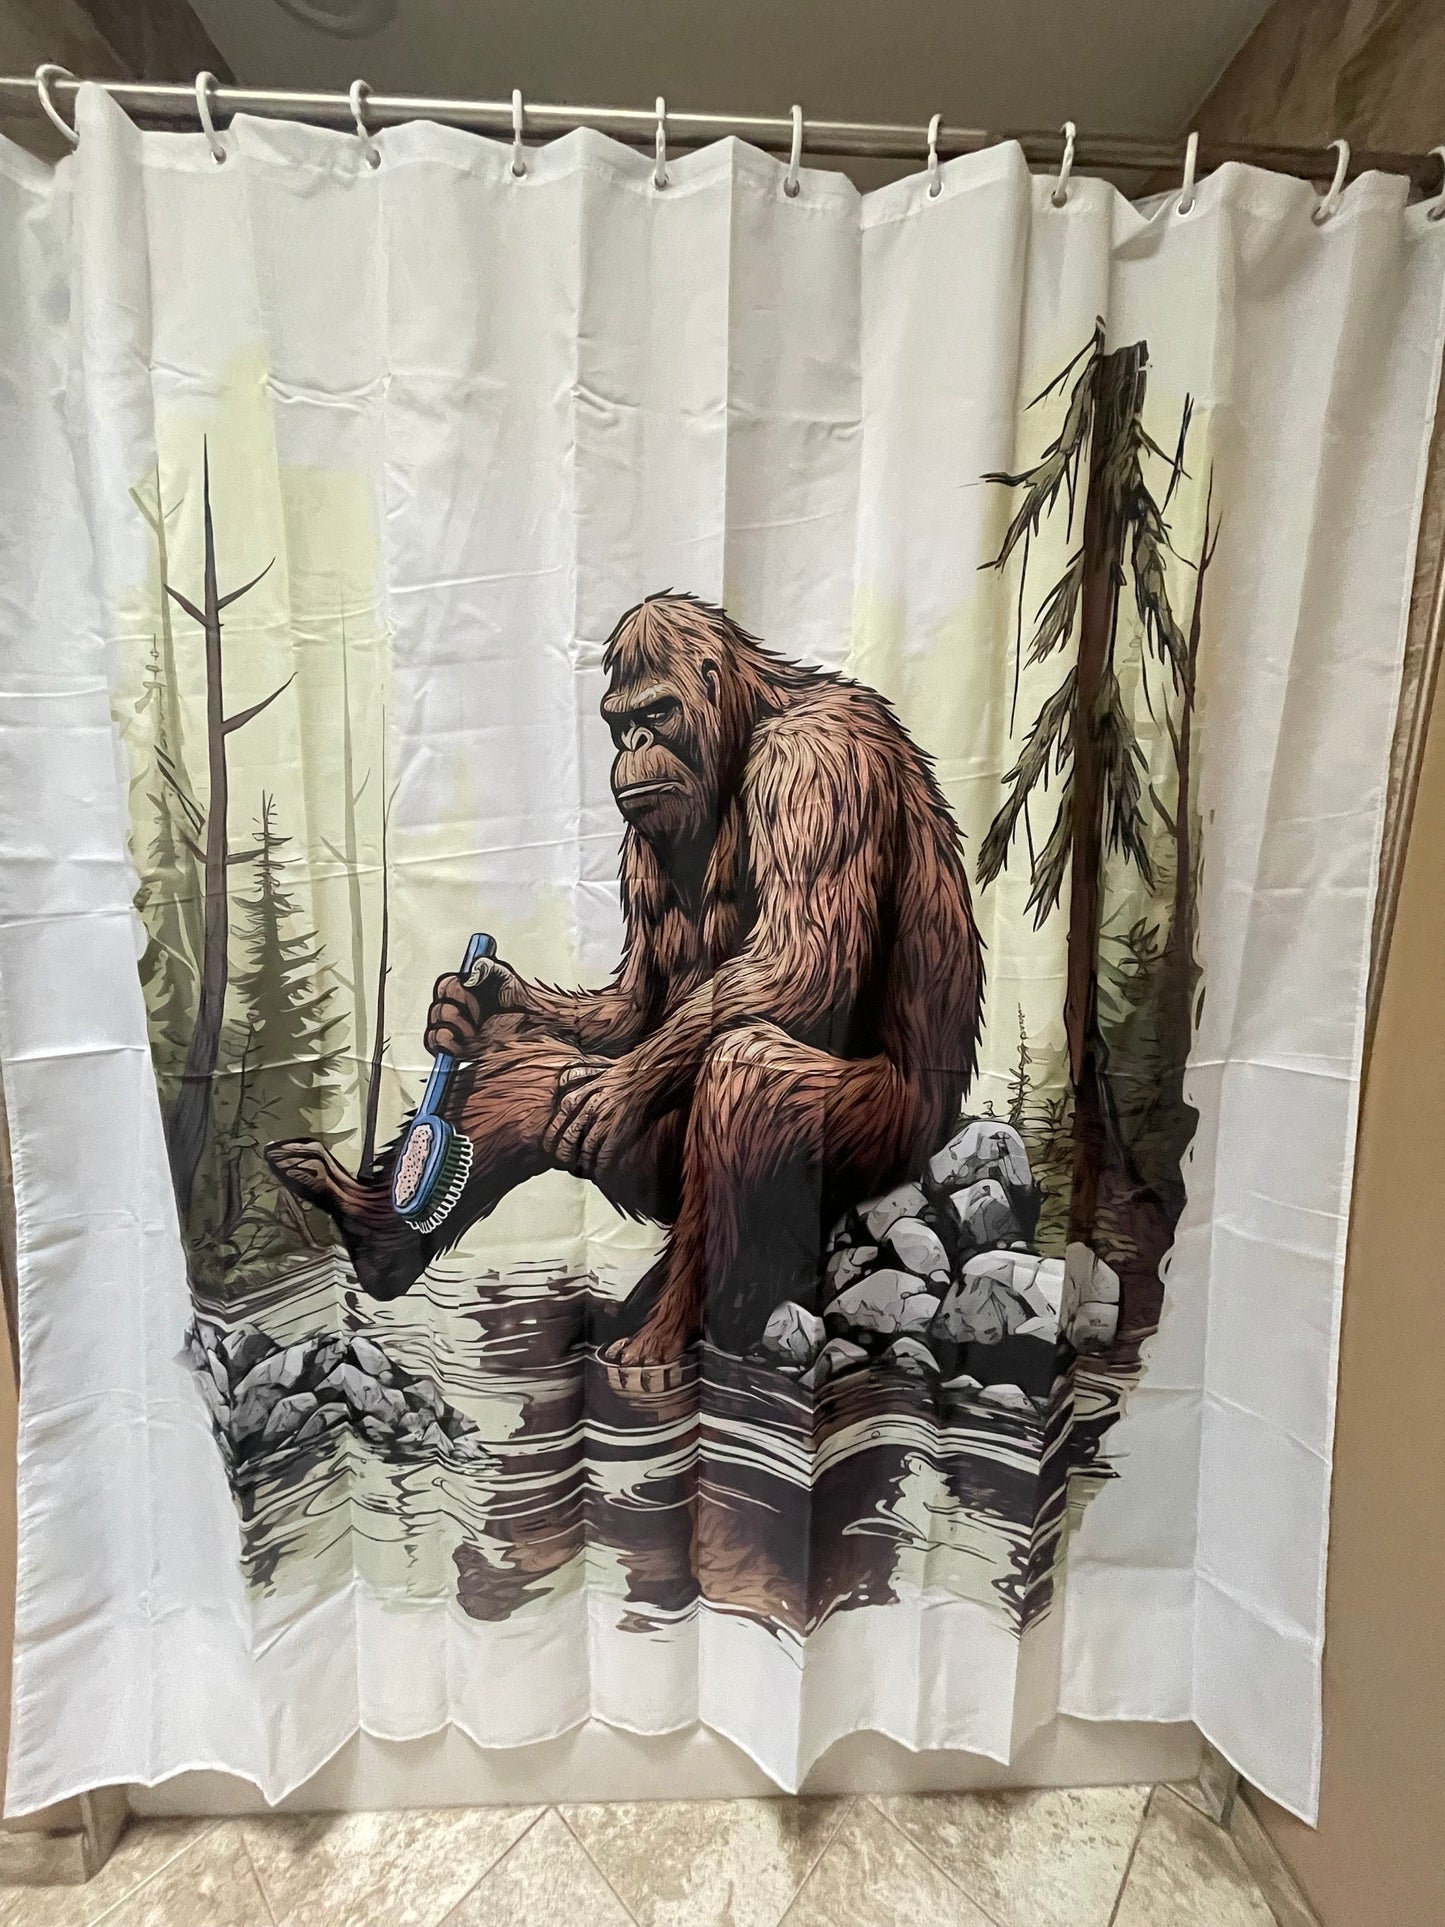 Bigfoot shower curtain - Sasquatch bathing in stream